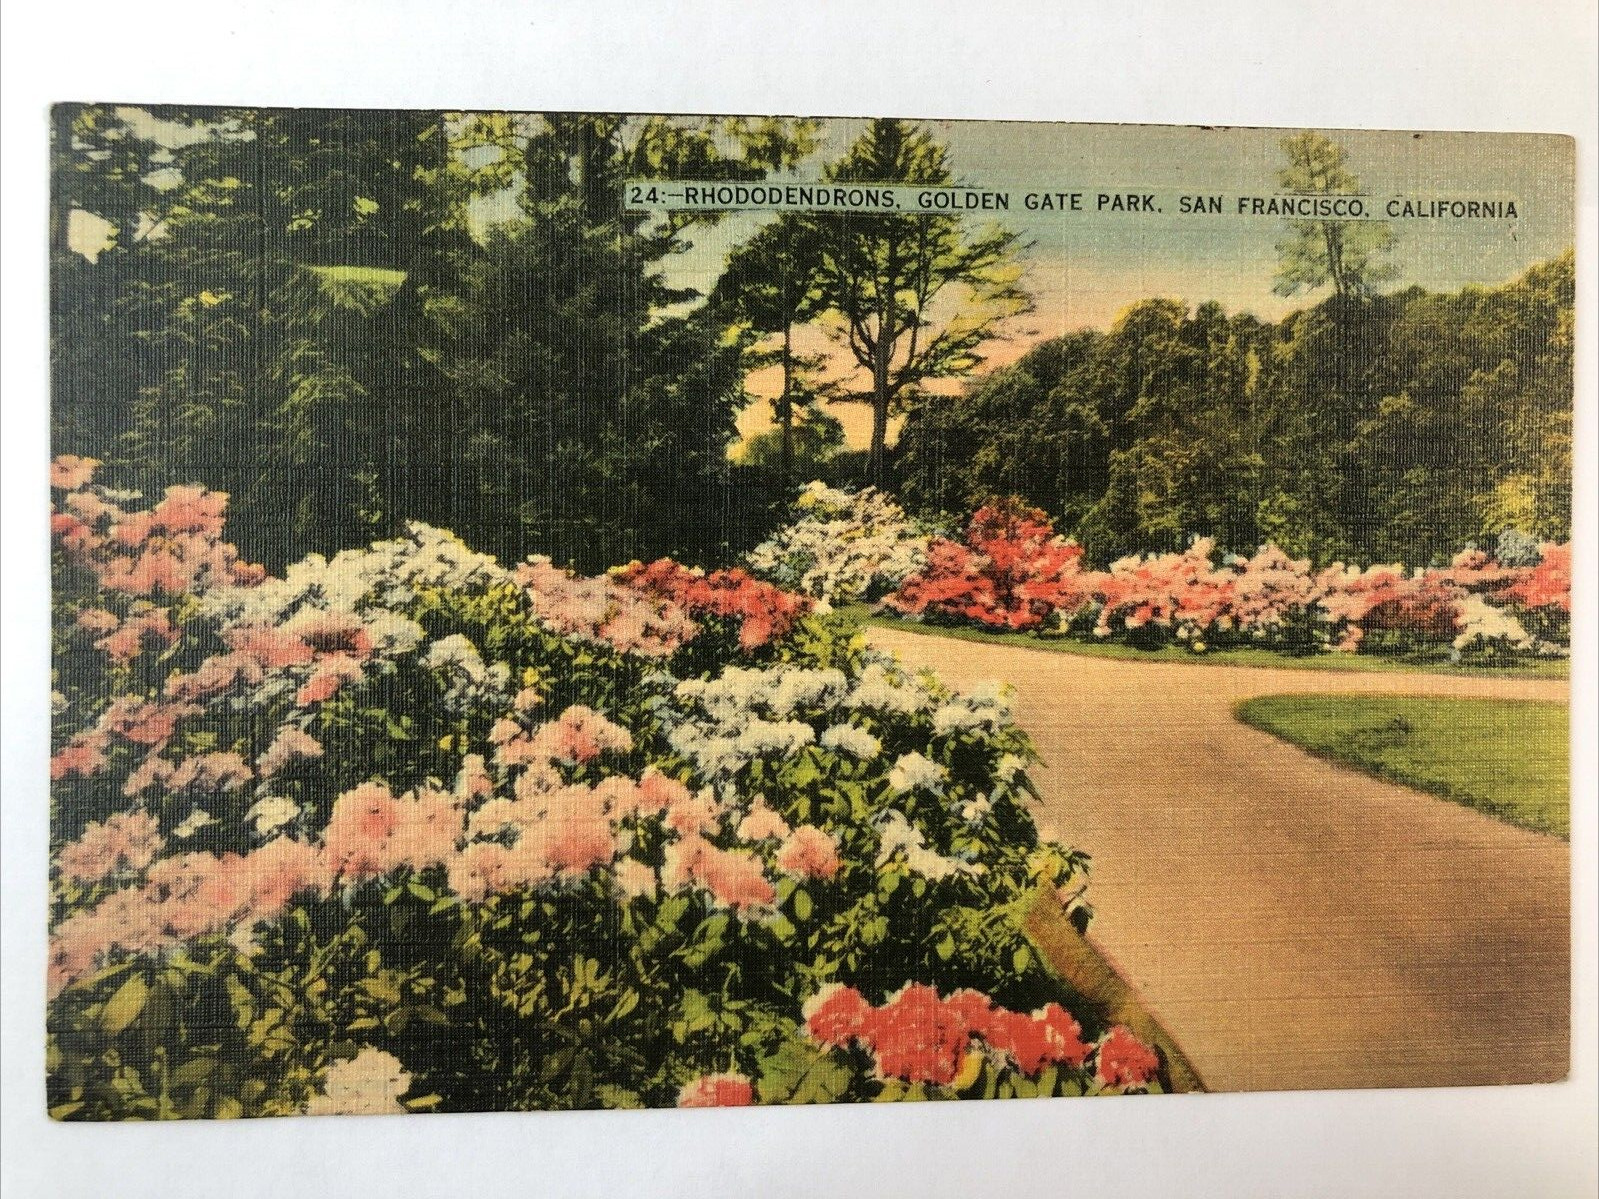 San Francisco, CA Rhododendron Golden Gate Park 24 c1940s Linen Postcard